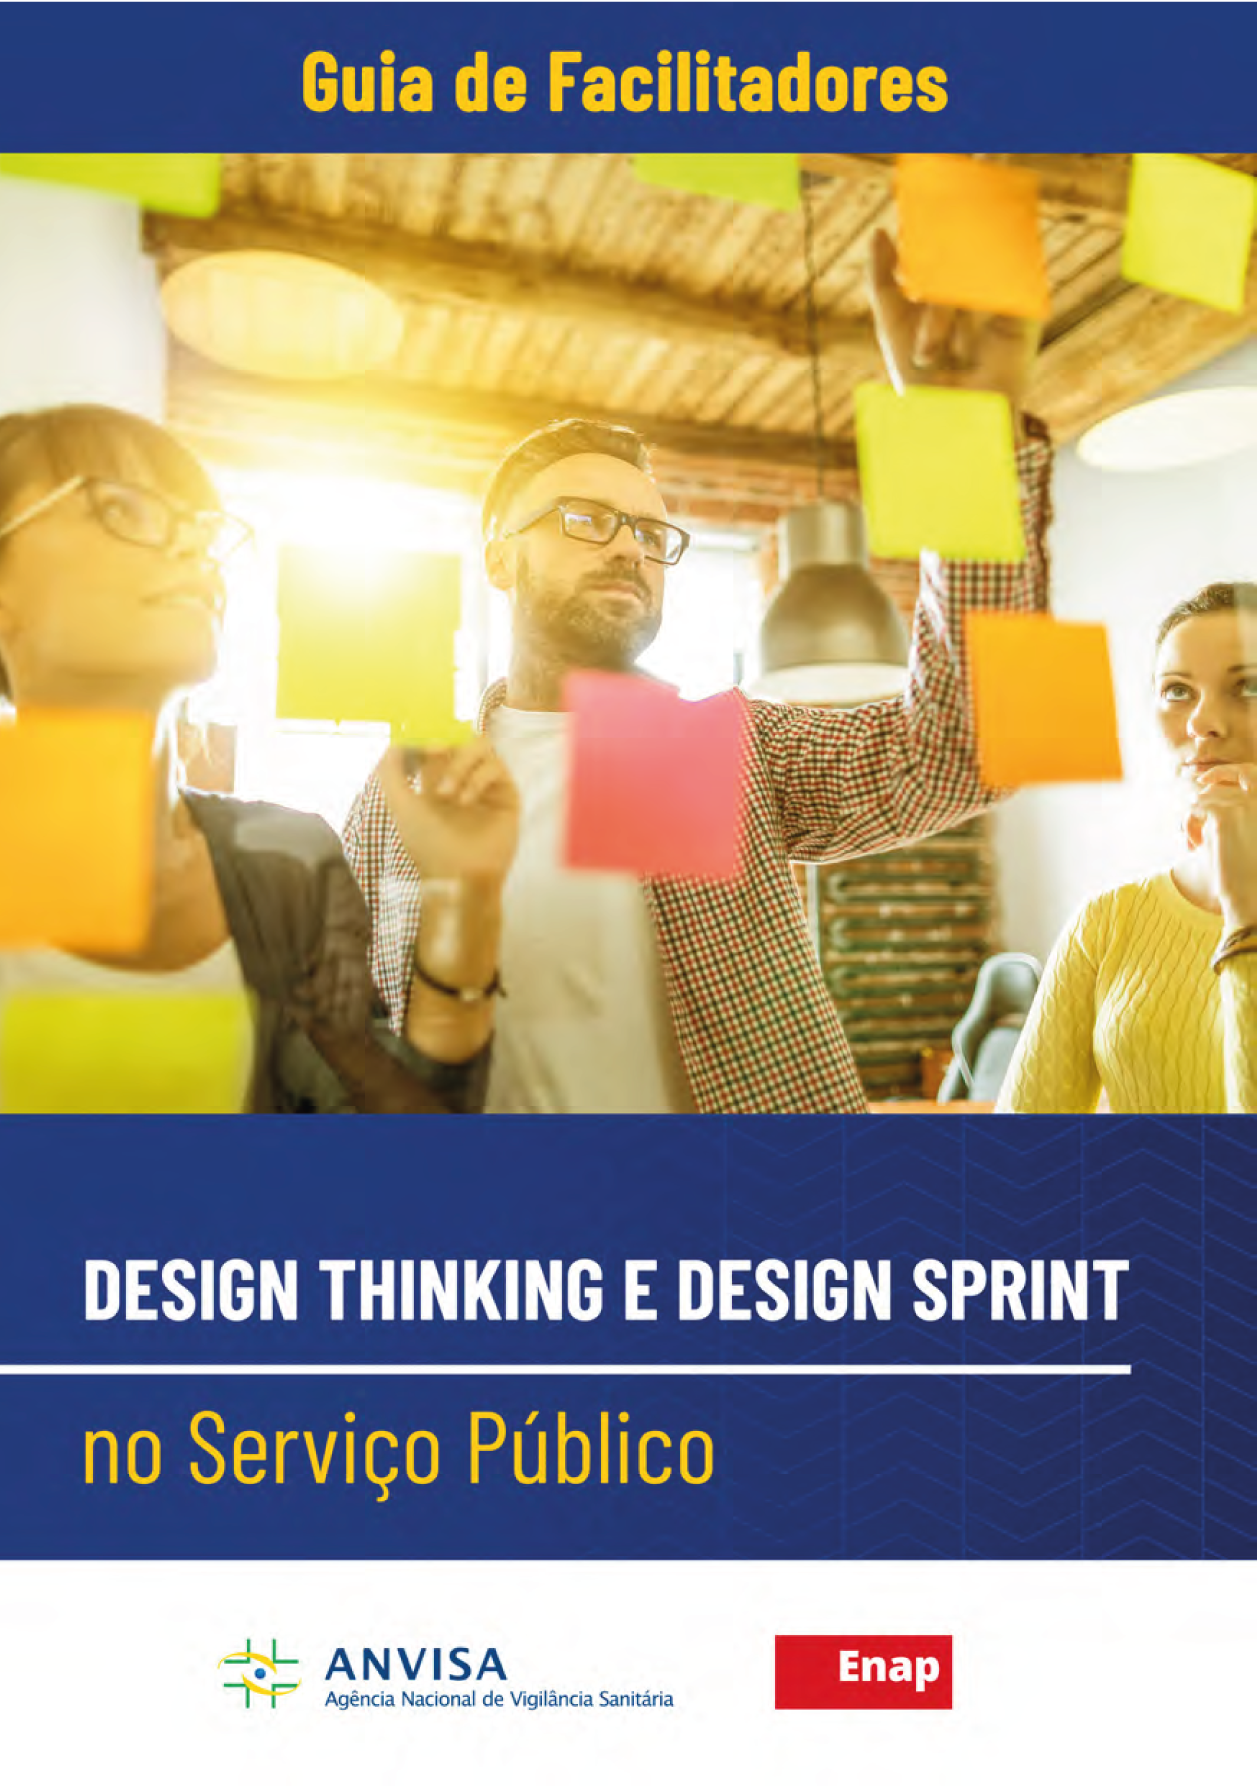 Guia de Facilitadores - Design Thinking e Design Sprint no Servico Publico